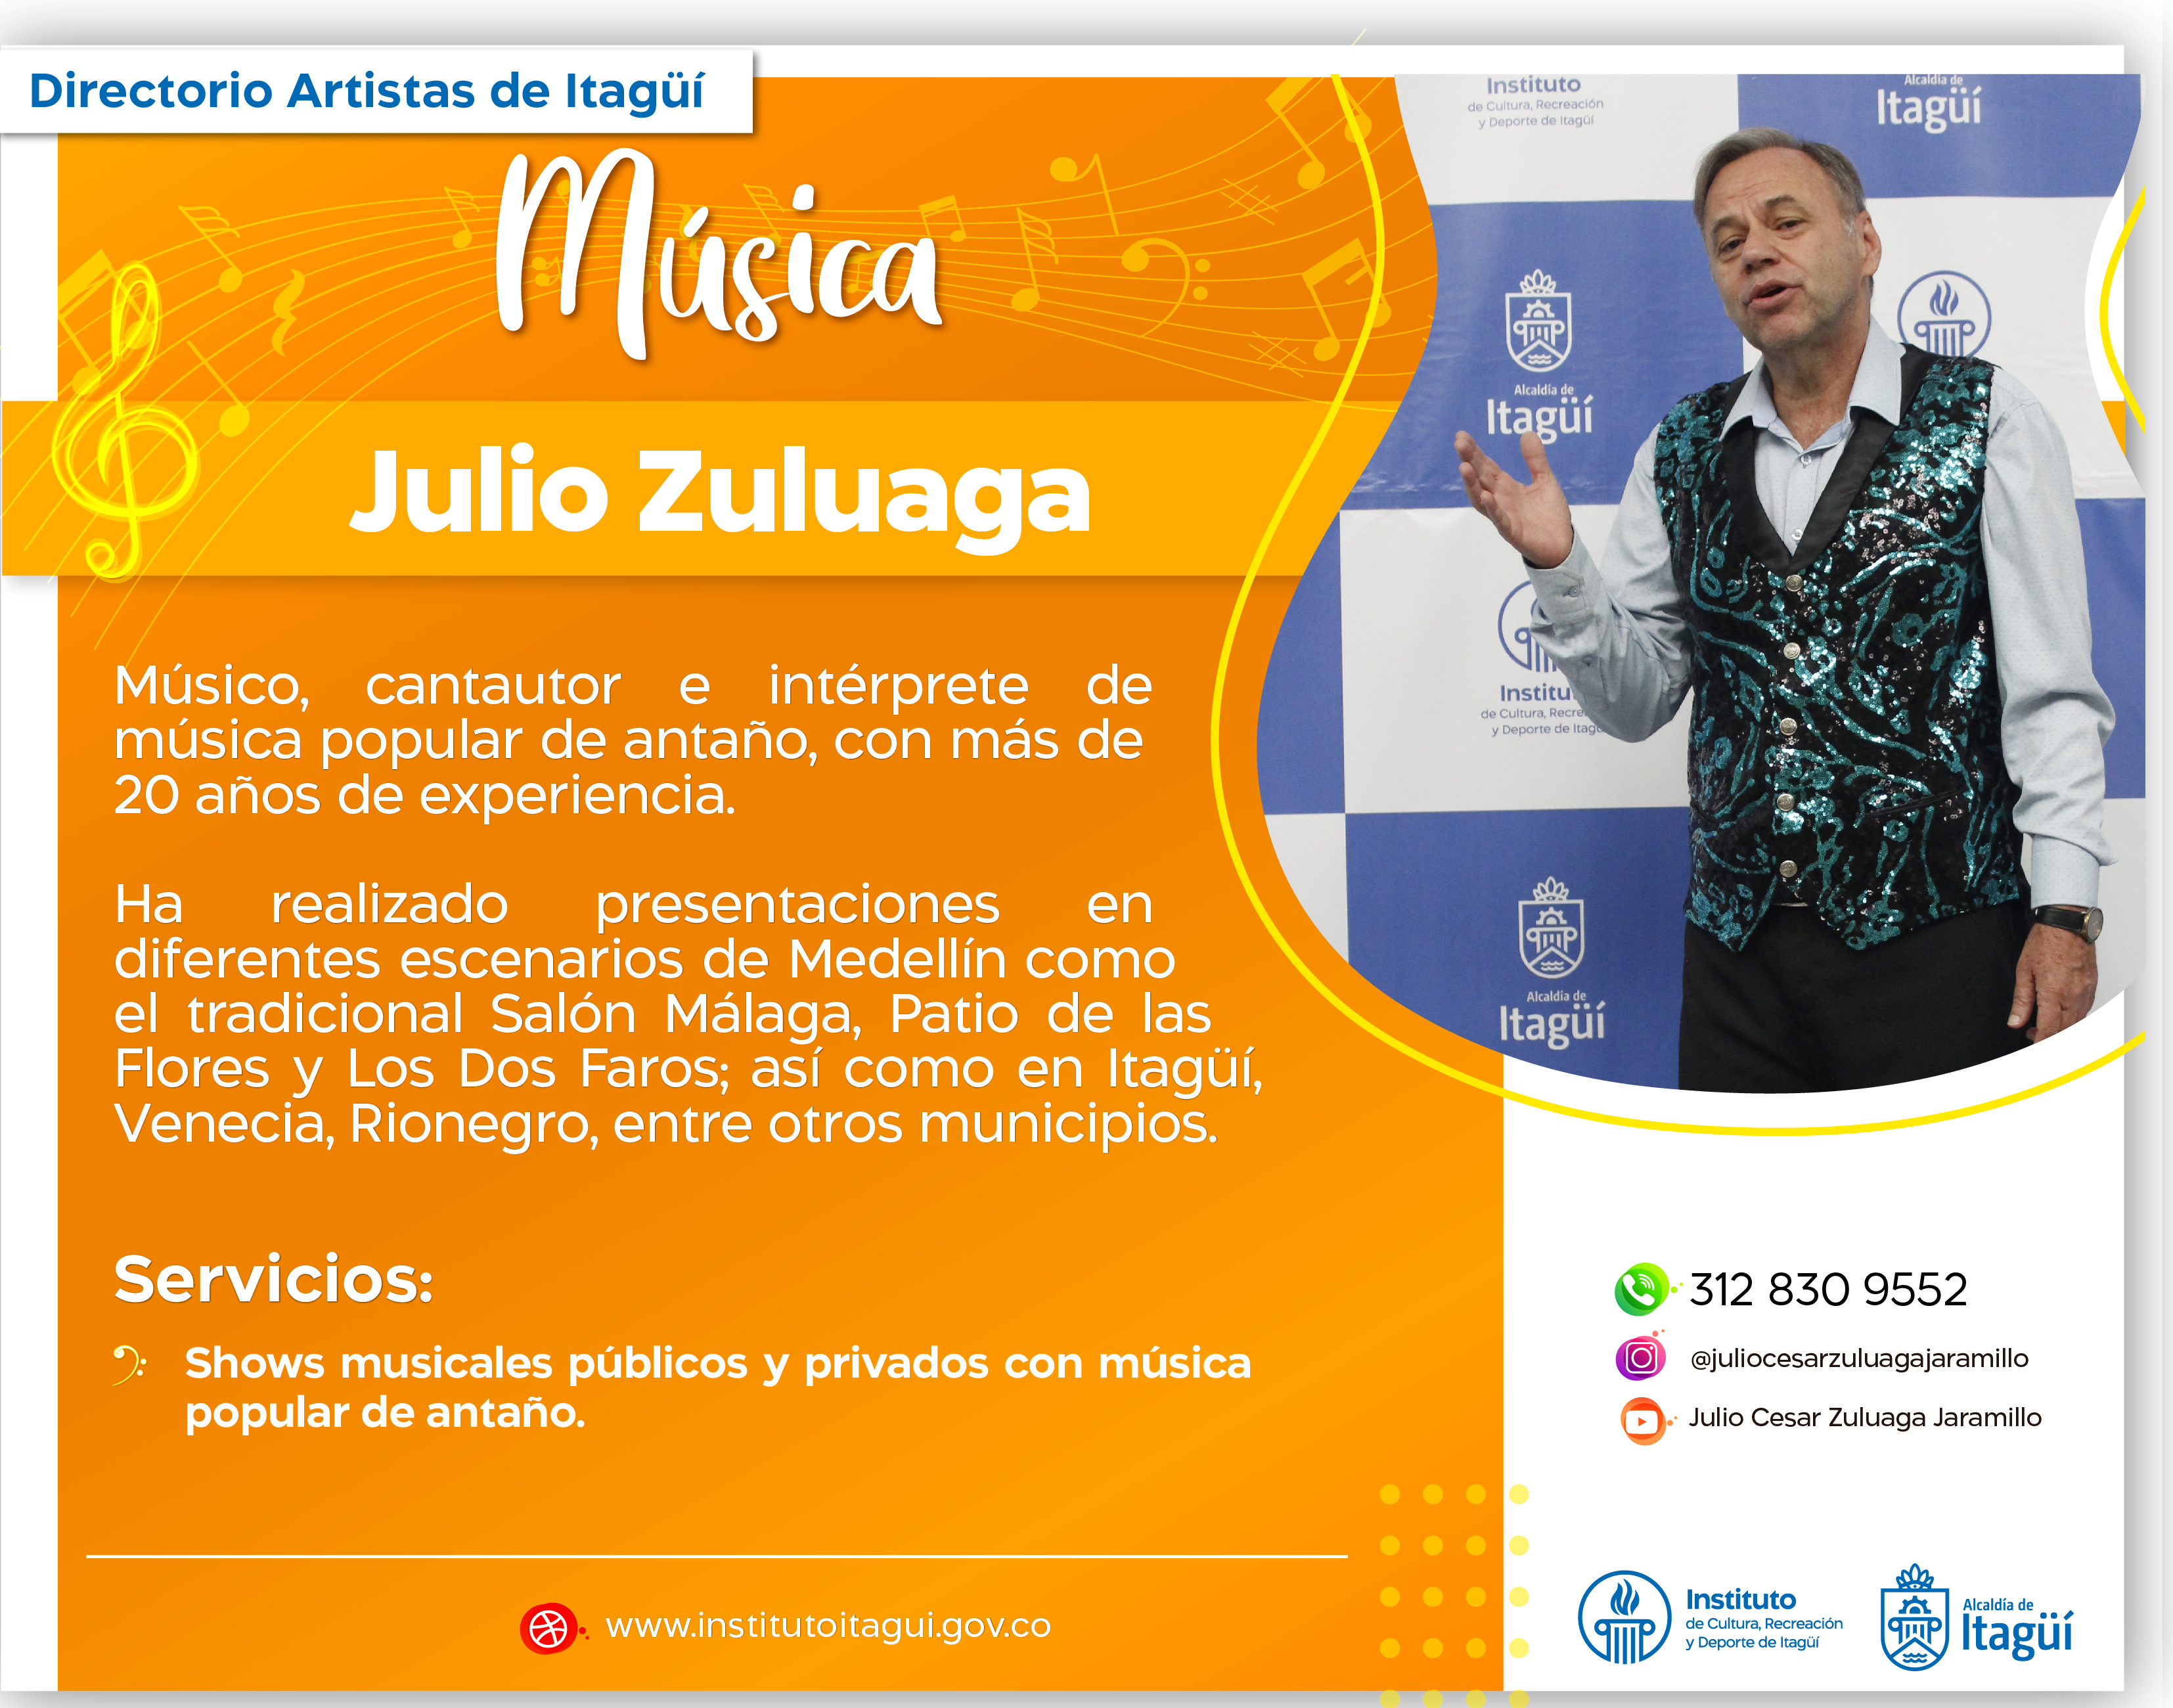 Julio Zuluaga